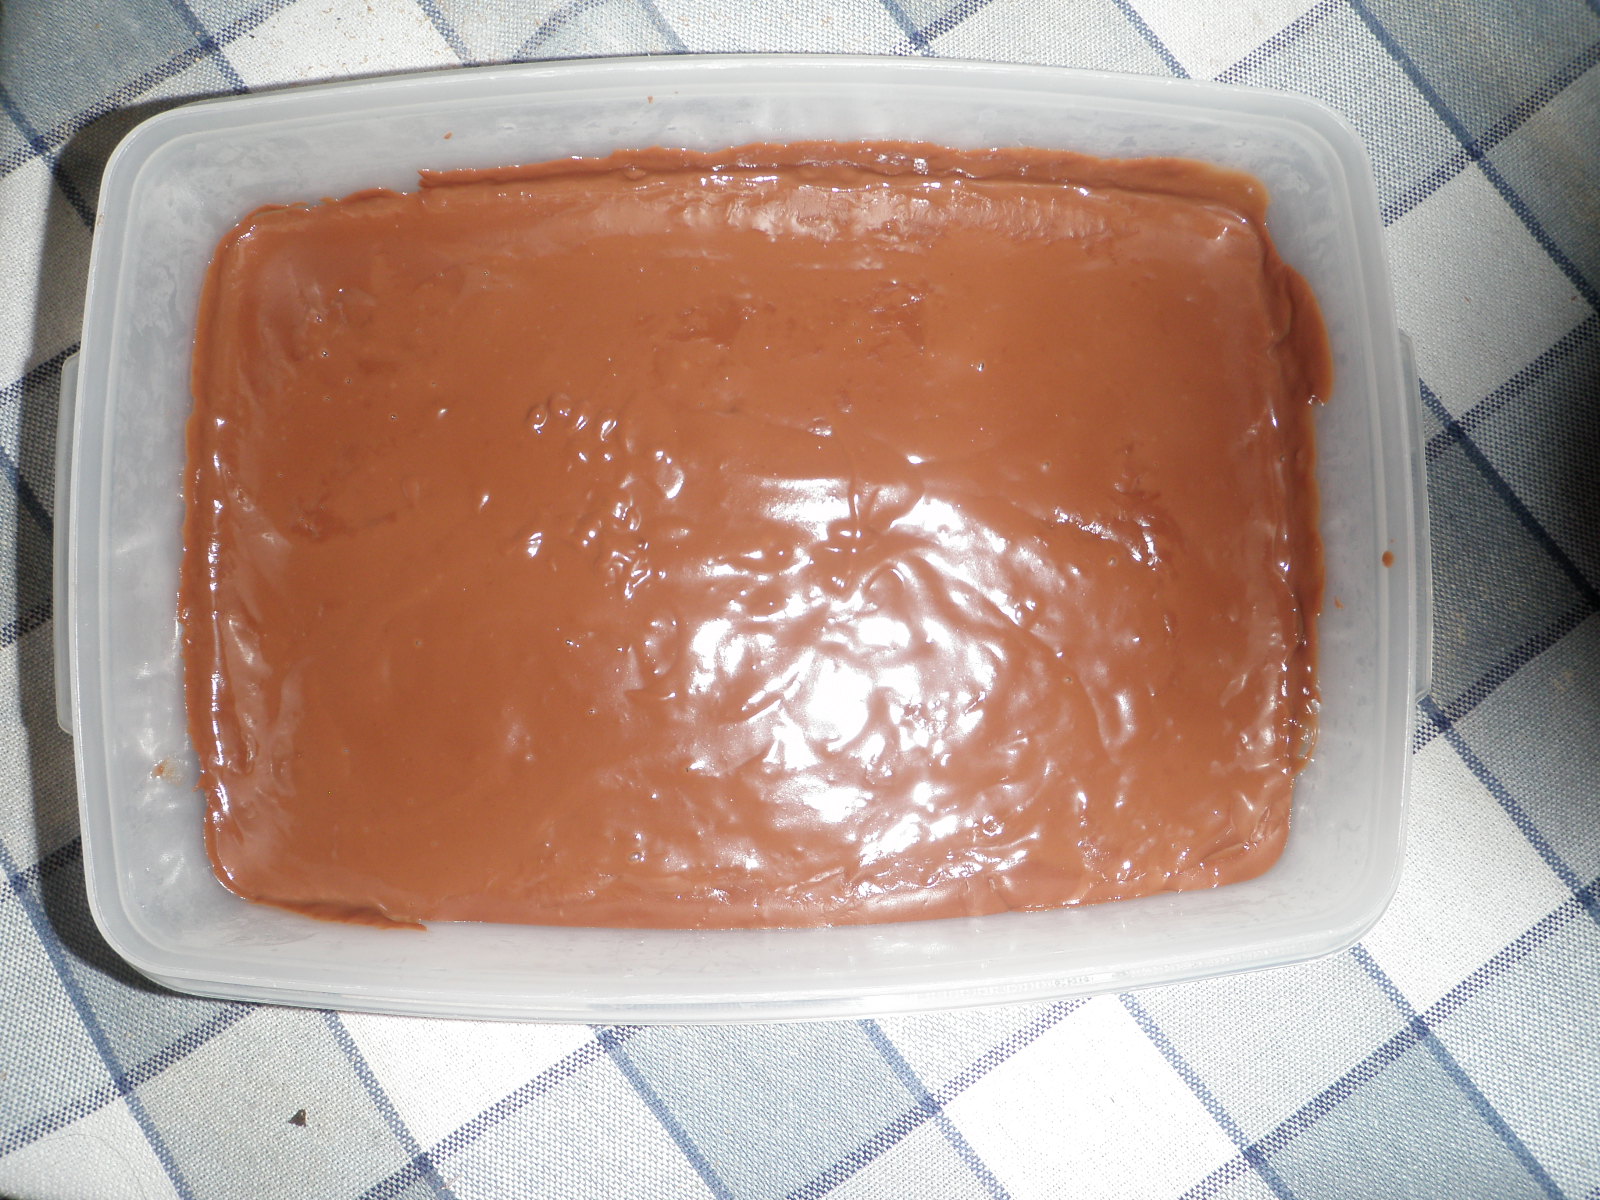 Nana's Homemade Chocolate Pudding Ervin Barnett